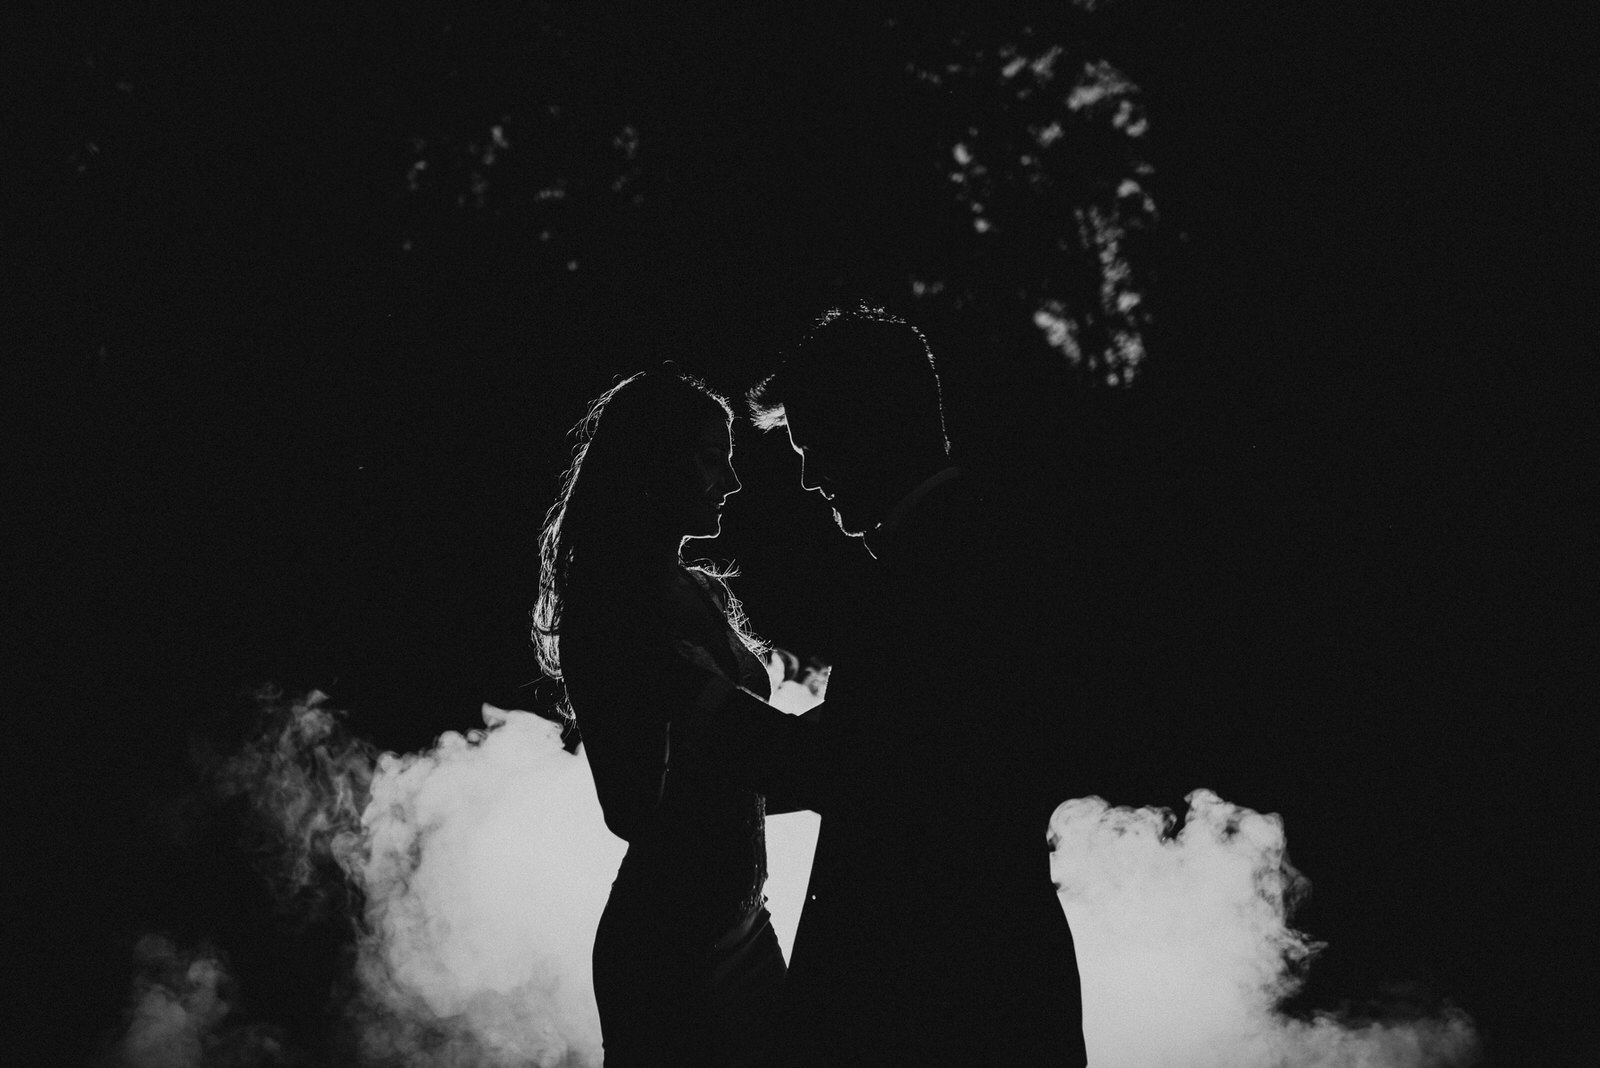 The Leddas Wedding Photography - Athena & Brandon: Radium Wedding